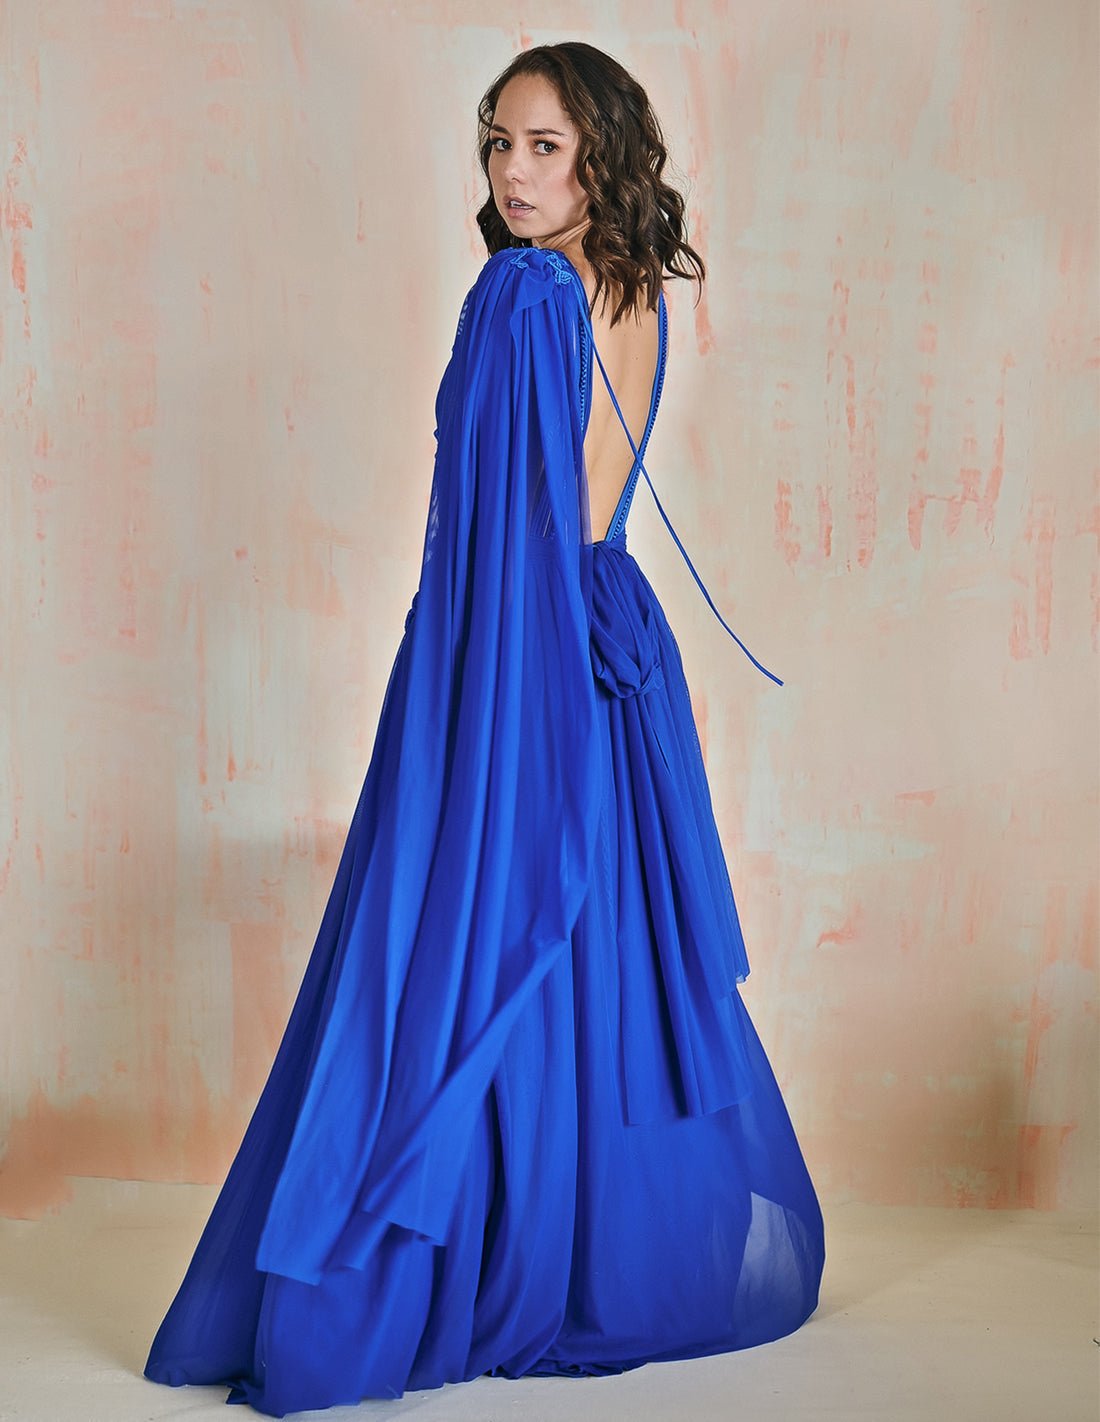 Copérnico Dress Royal Blue - Dress - Entreaguas Wearable Art